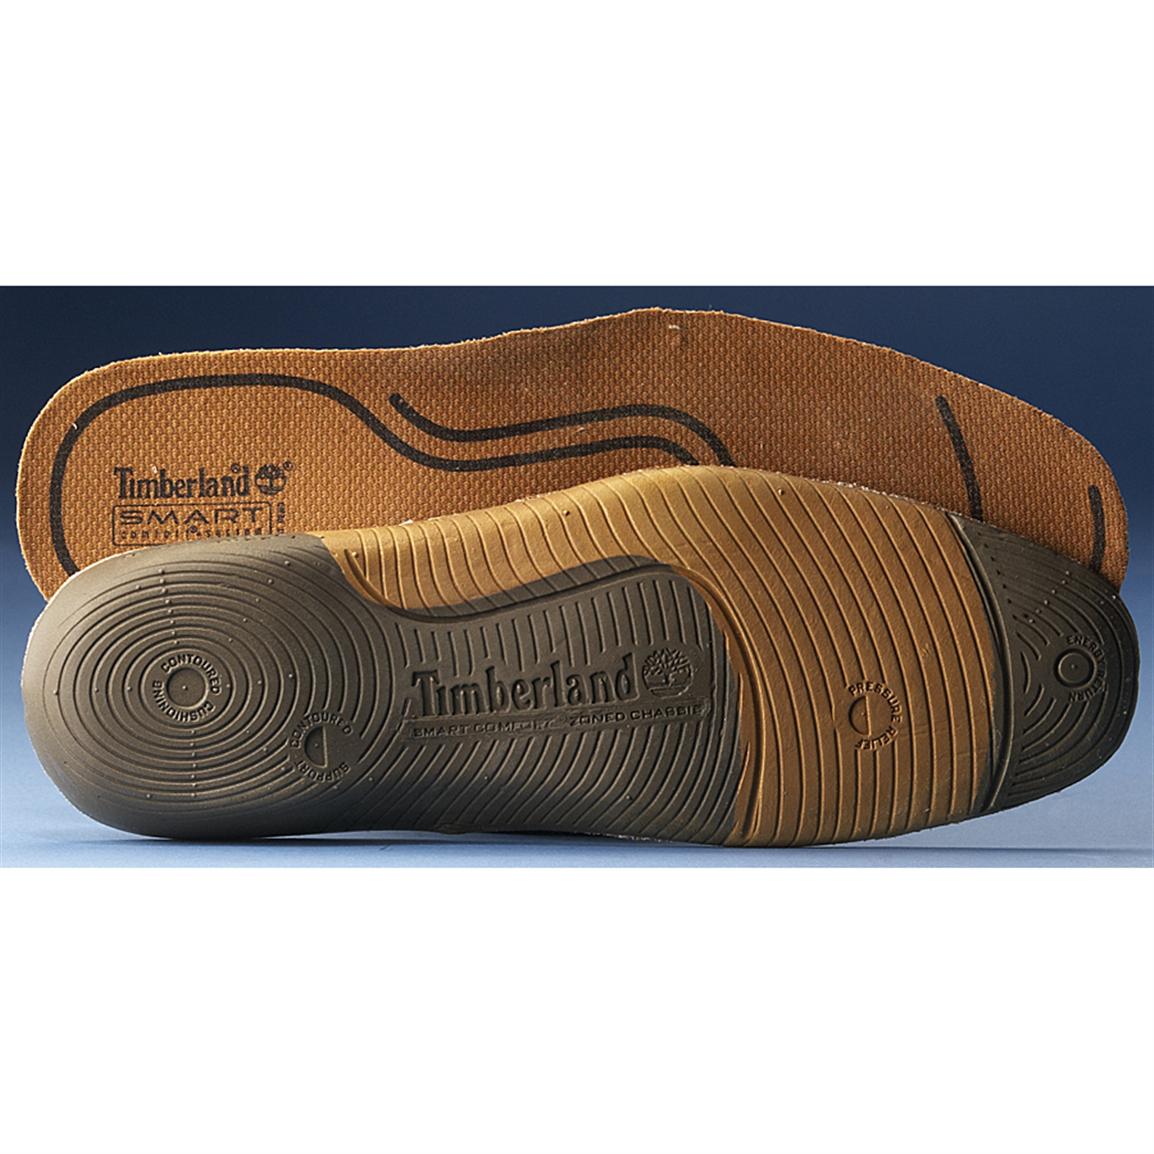 timberland smart comfort shoes